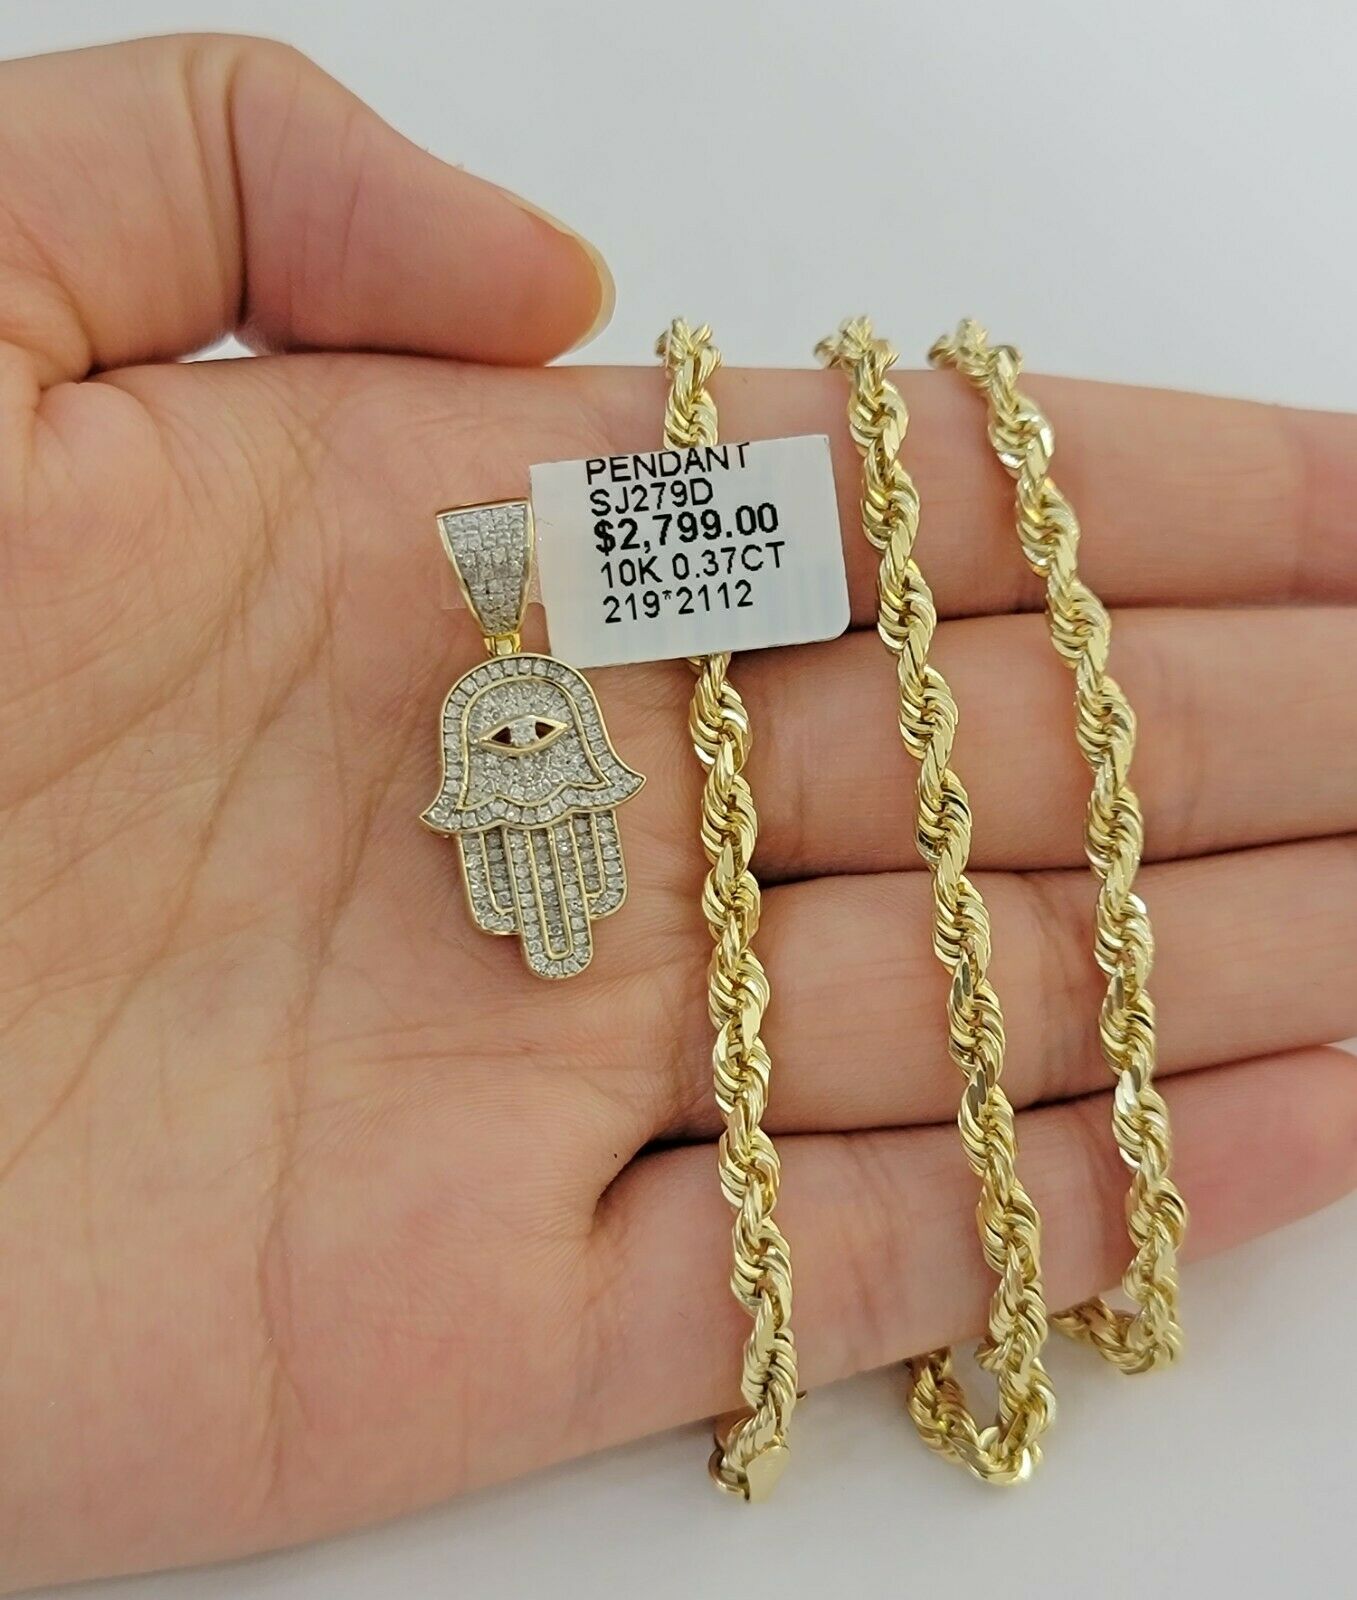 Solid 10k Gold Rope Chain Diamond Pendant Hamza Hand Charm Necklace 22